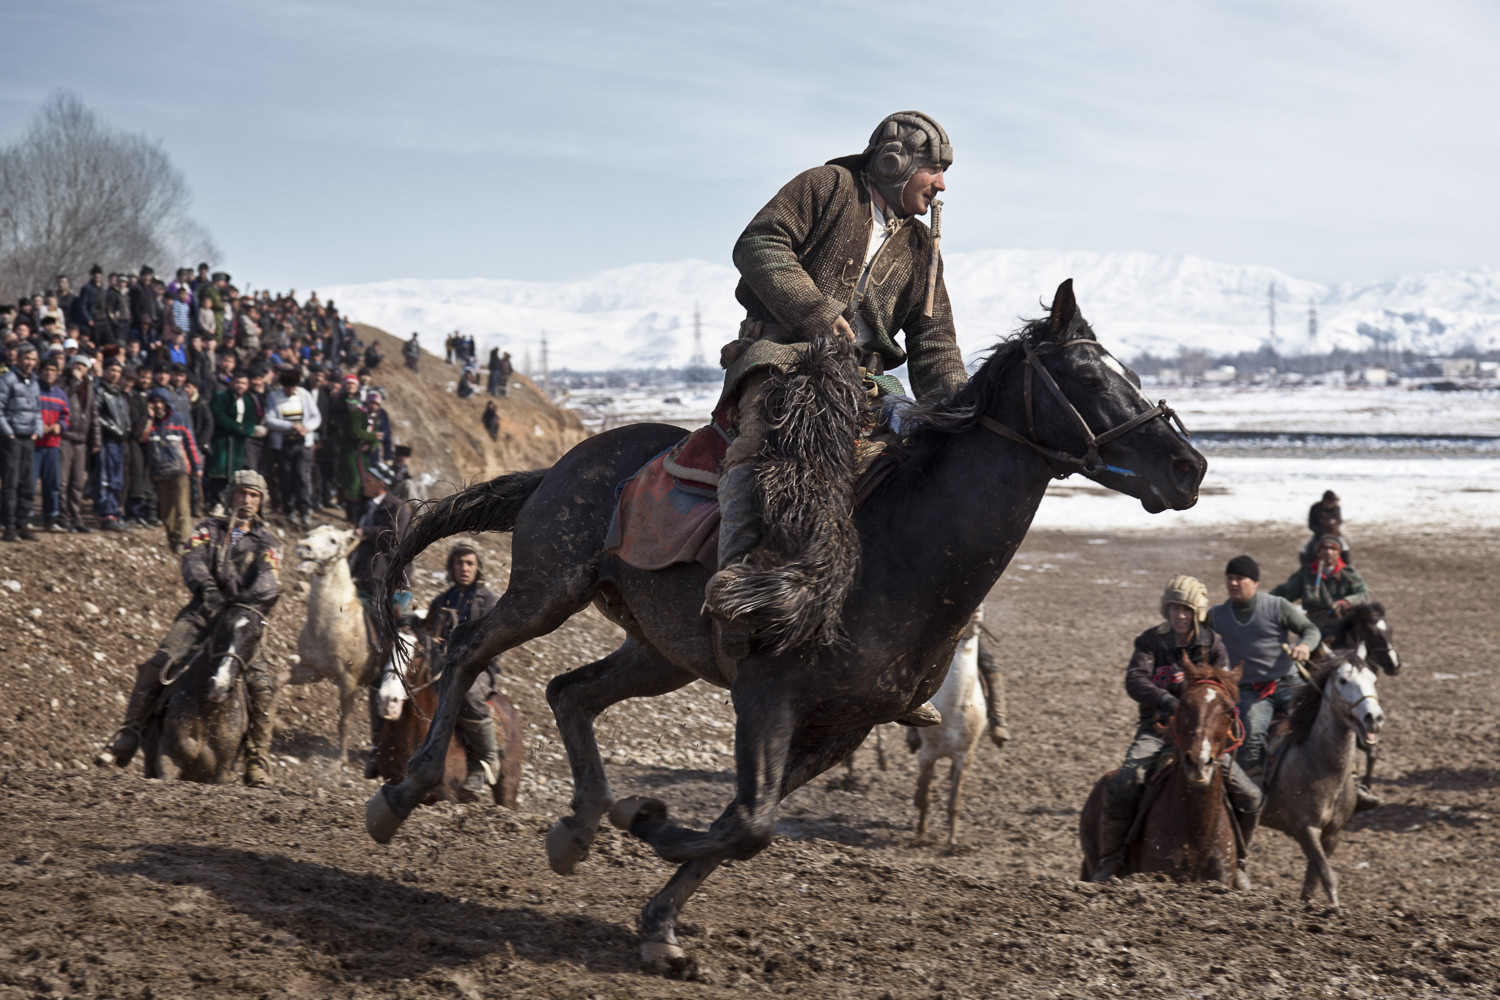  A buzkashi rider breaks free of the pack in a weekend match near Dushanbe, Tajikistan. 